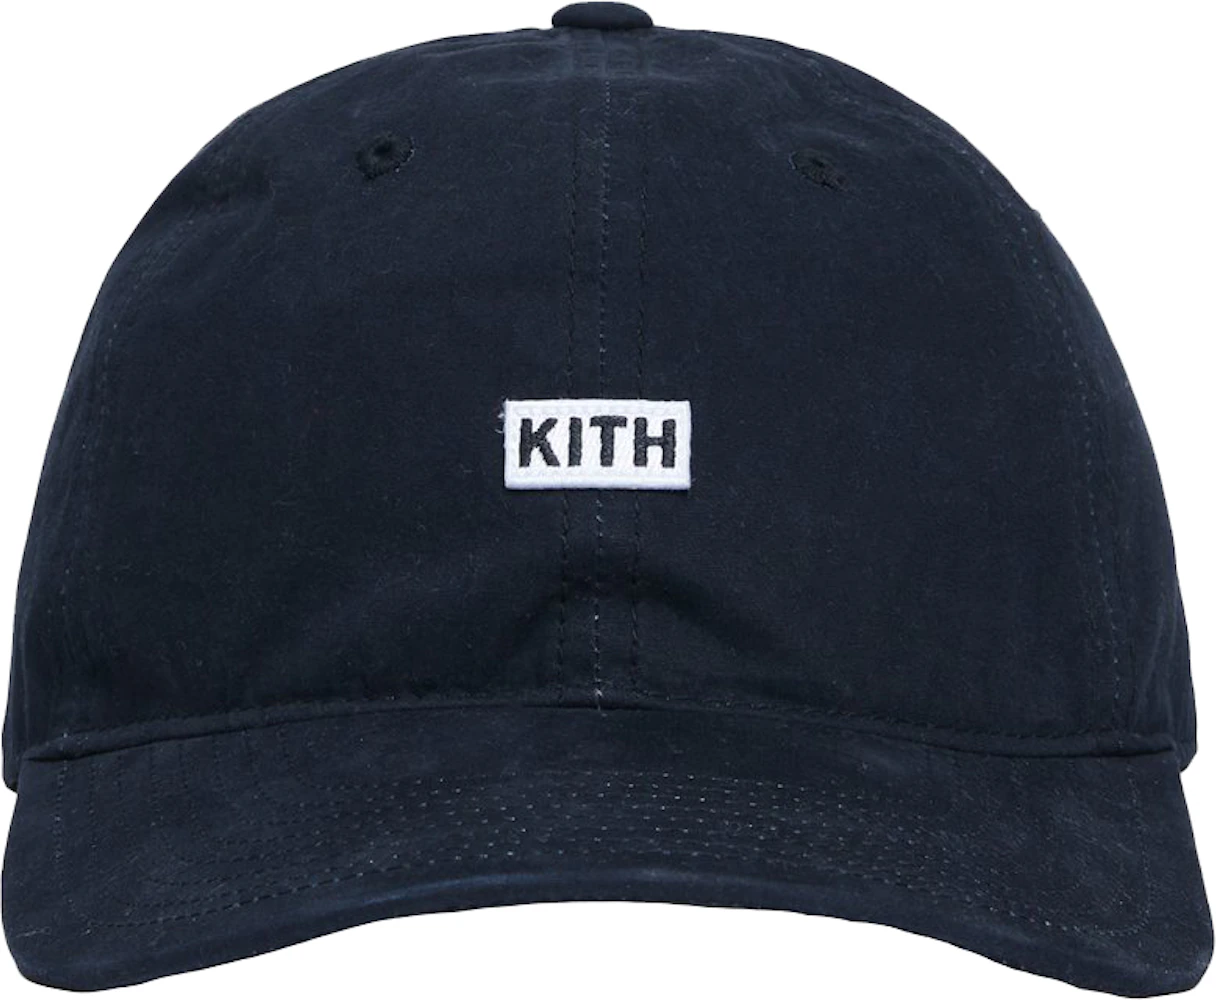 Kith Sandwash Cotton Cap Black - FW20 - GB